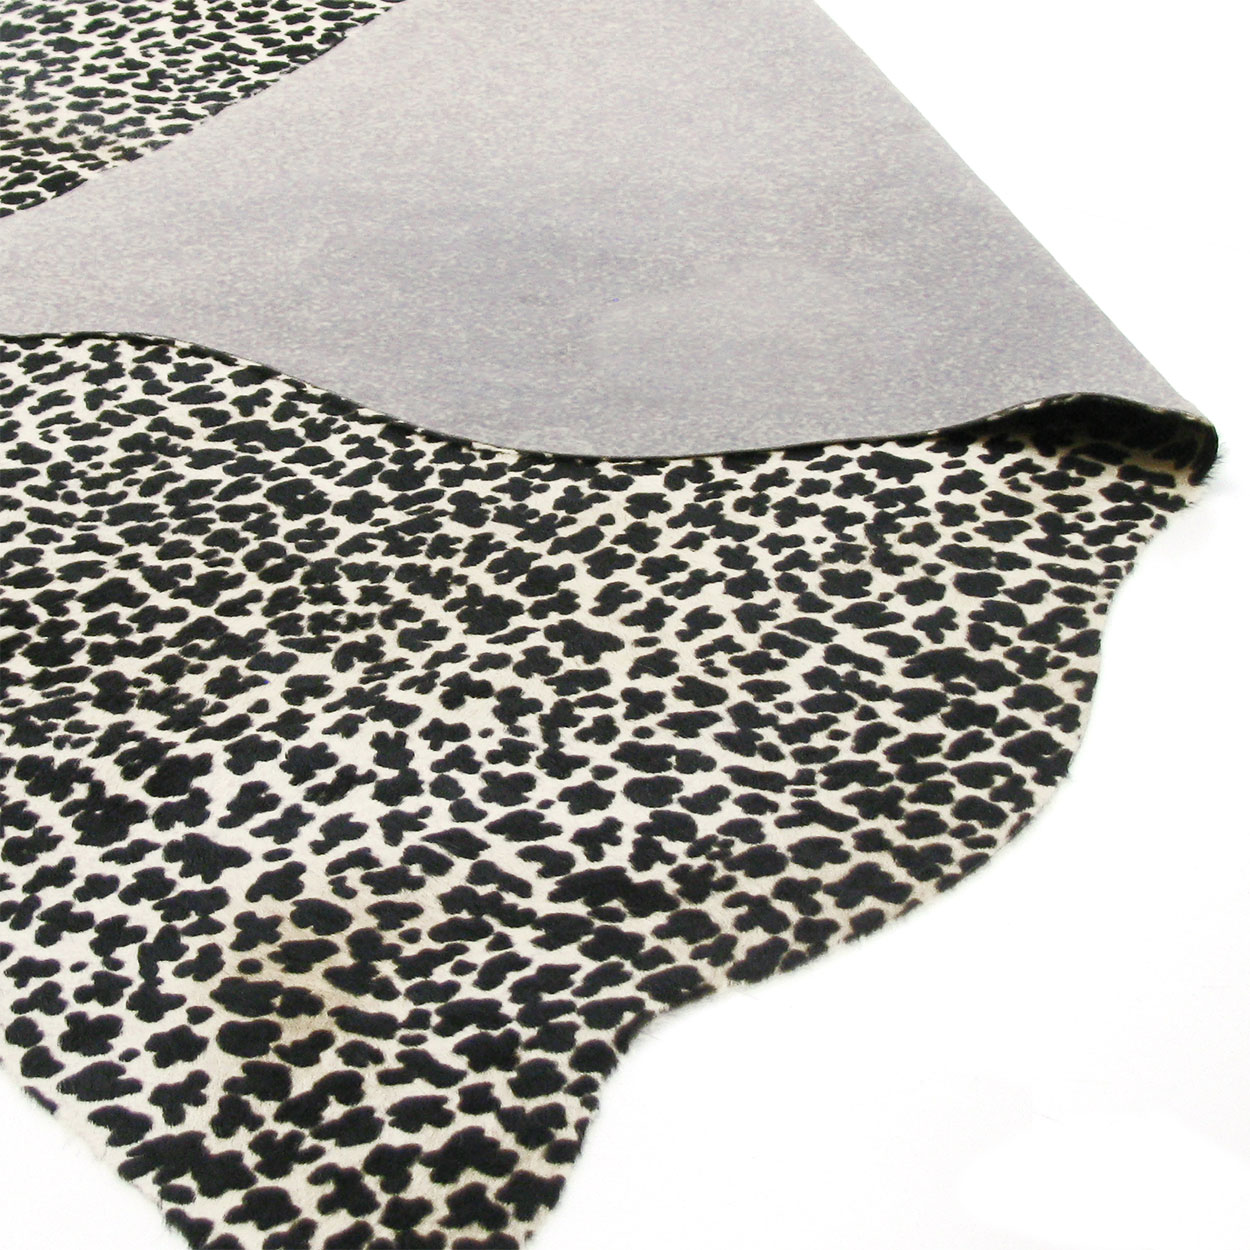 322311 - Safari Stenciled Leopard Print on Beige Premium Cowhide